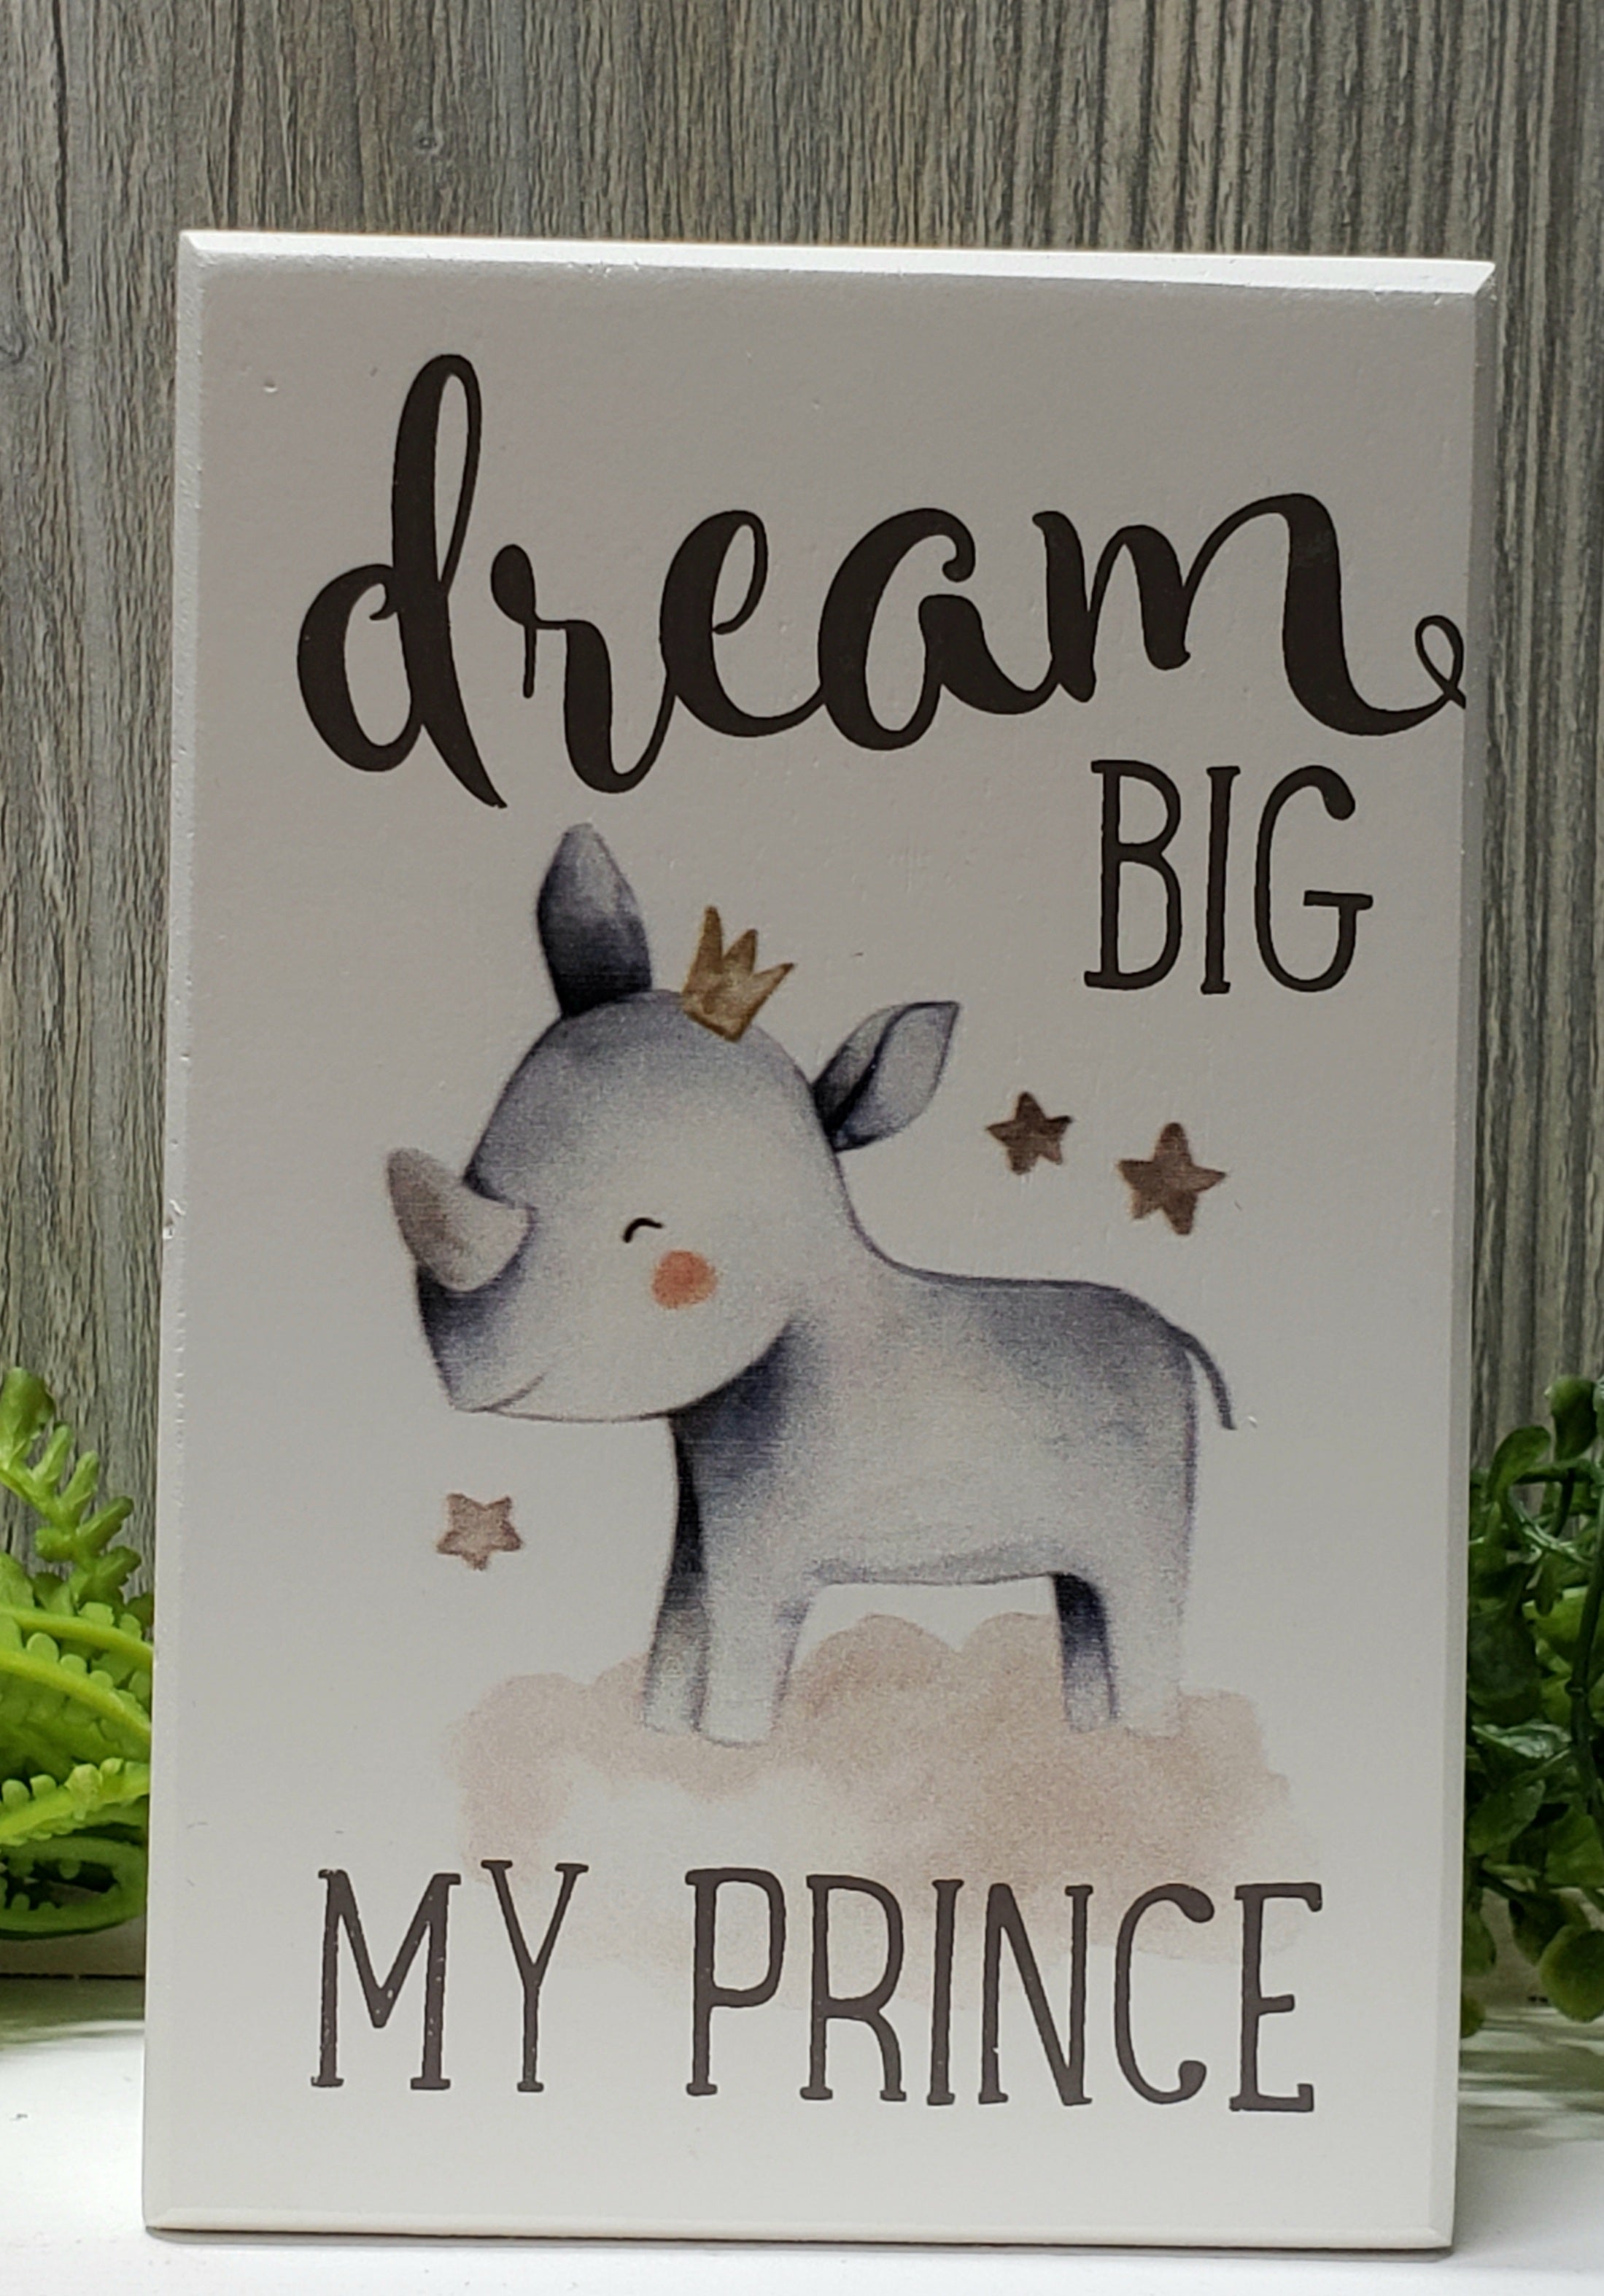 Dream big my prince